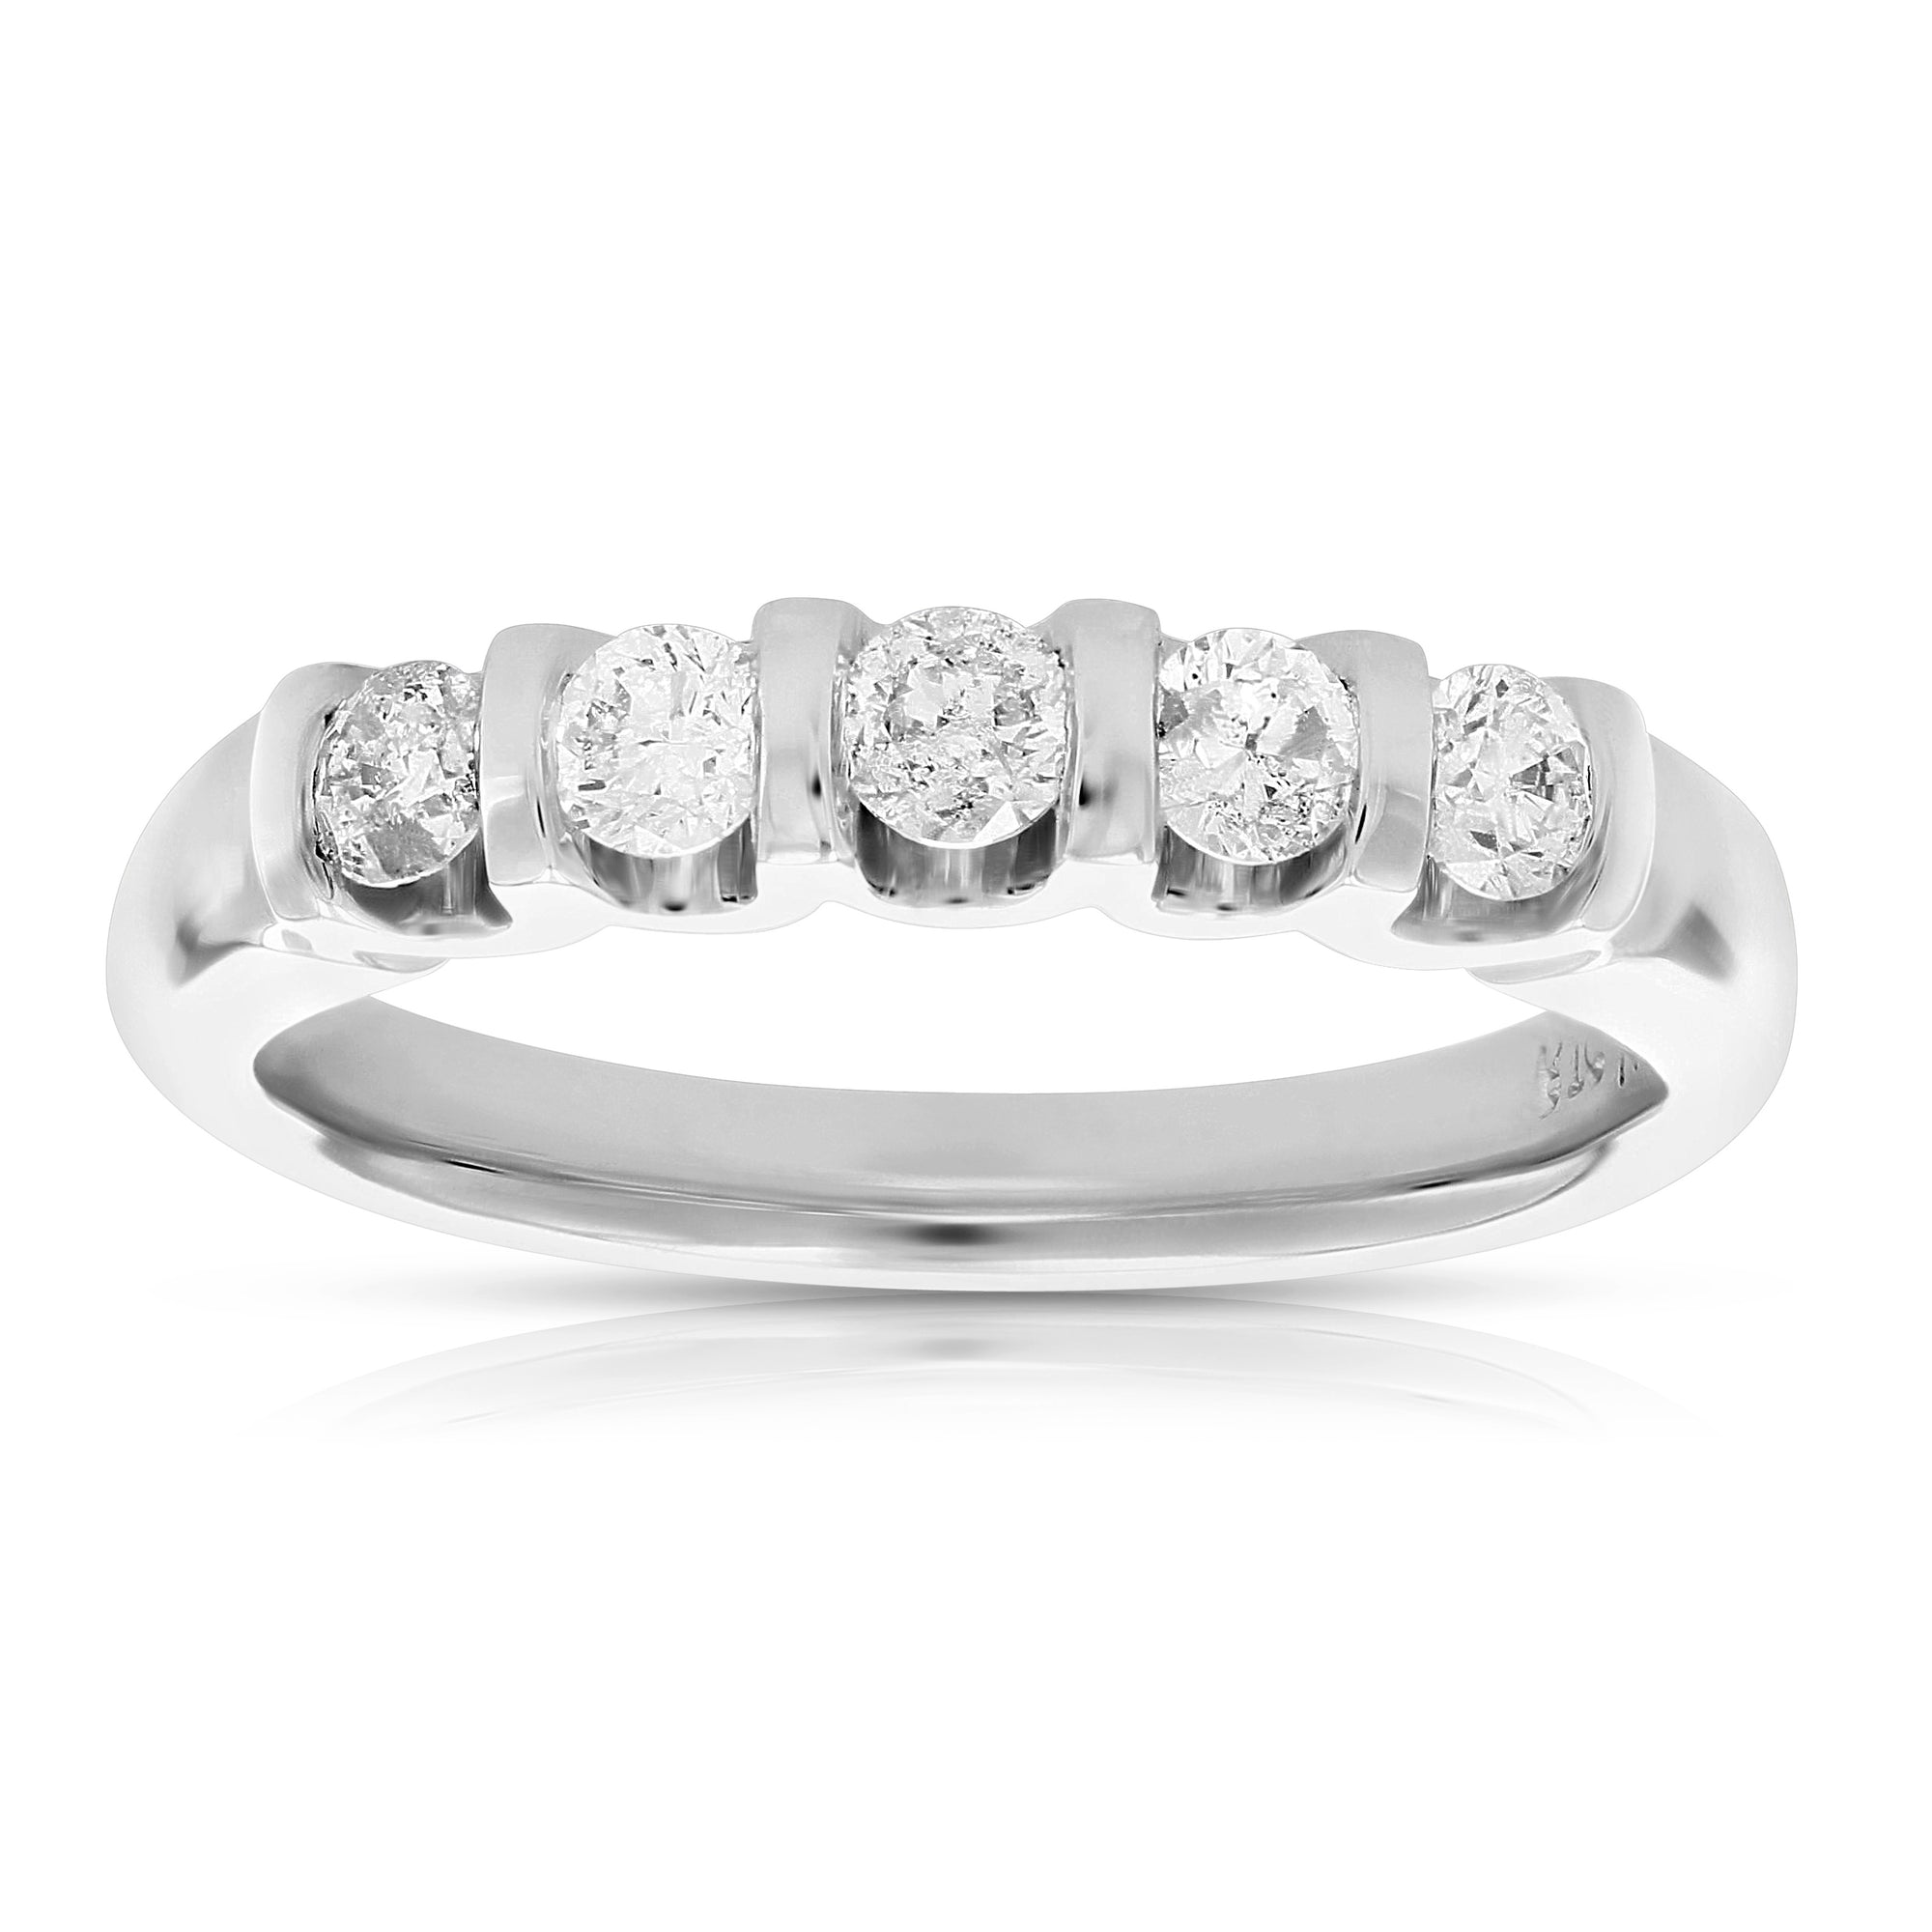 2/5 cttw Diamond 5 Stone Ring 14K White Gold Engagement Wedding Bridal Size 7